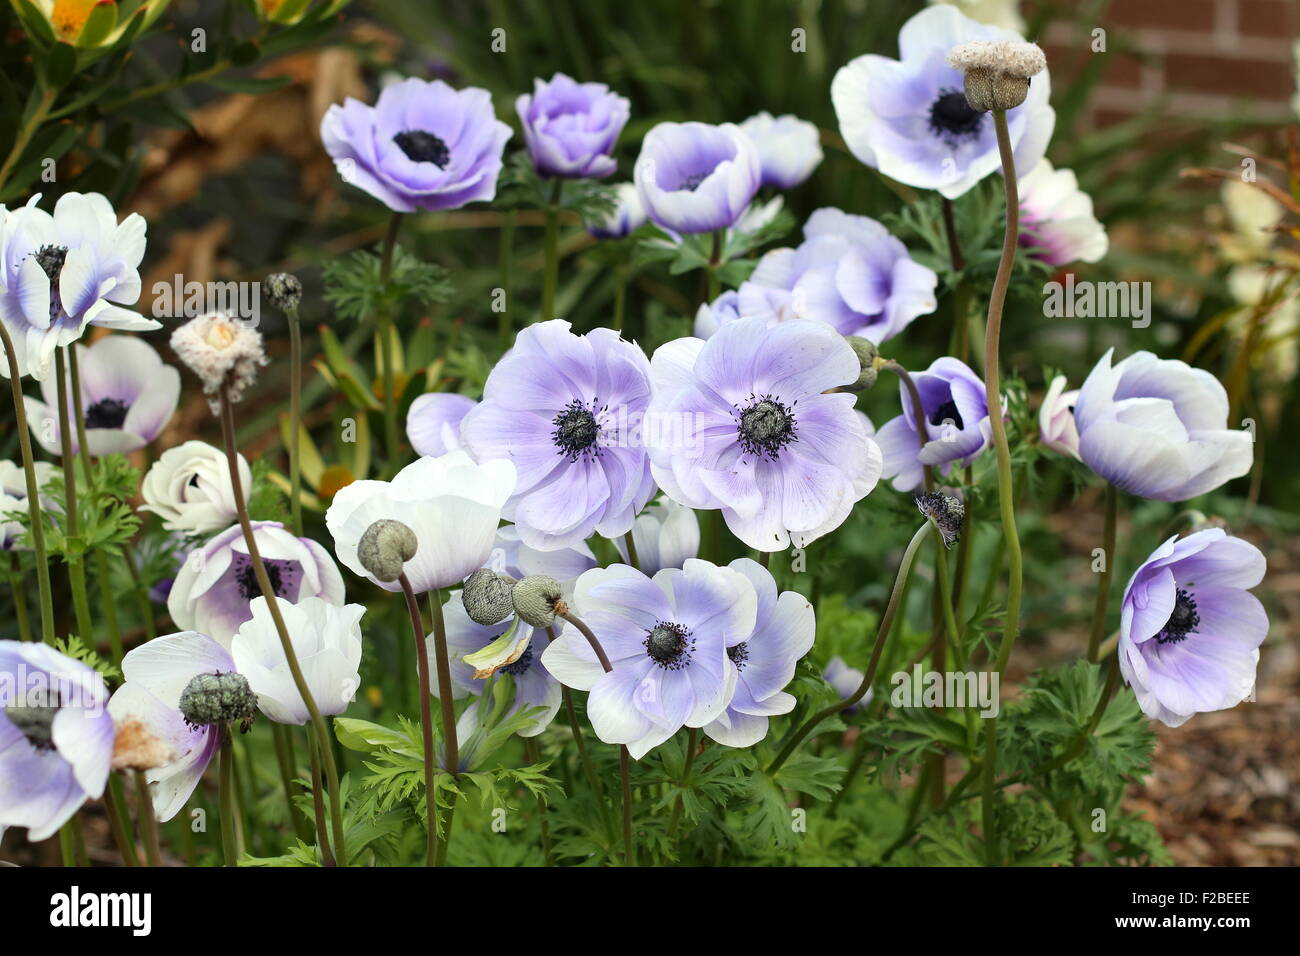 White anemones with purple tinge on petals Stock Photo